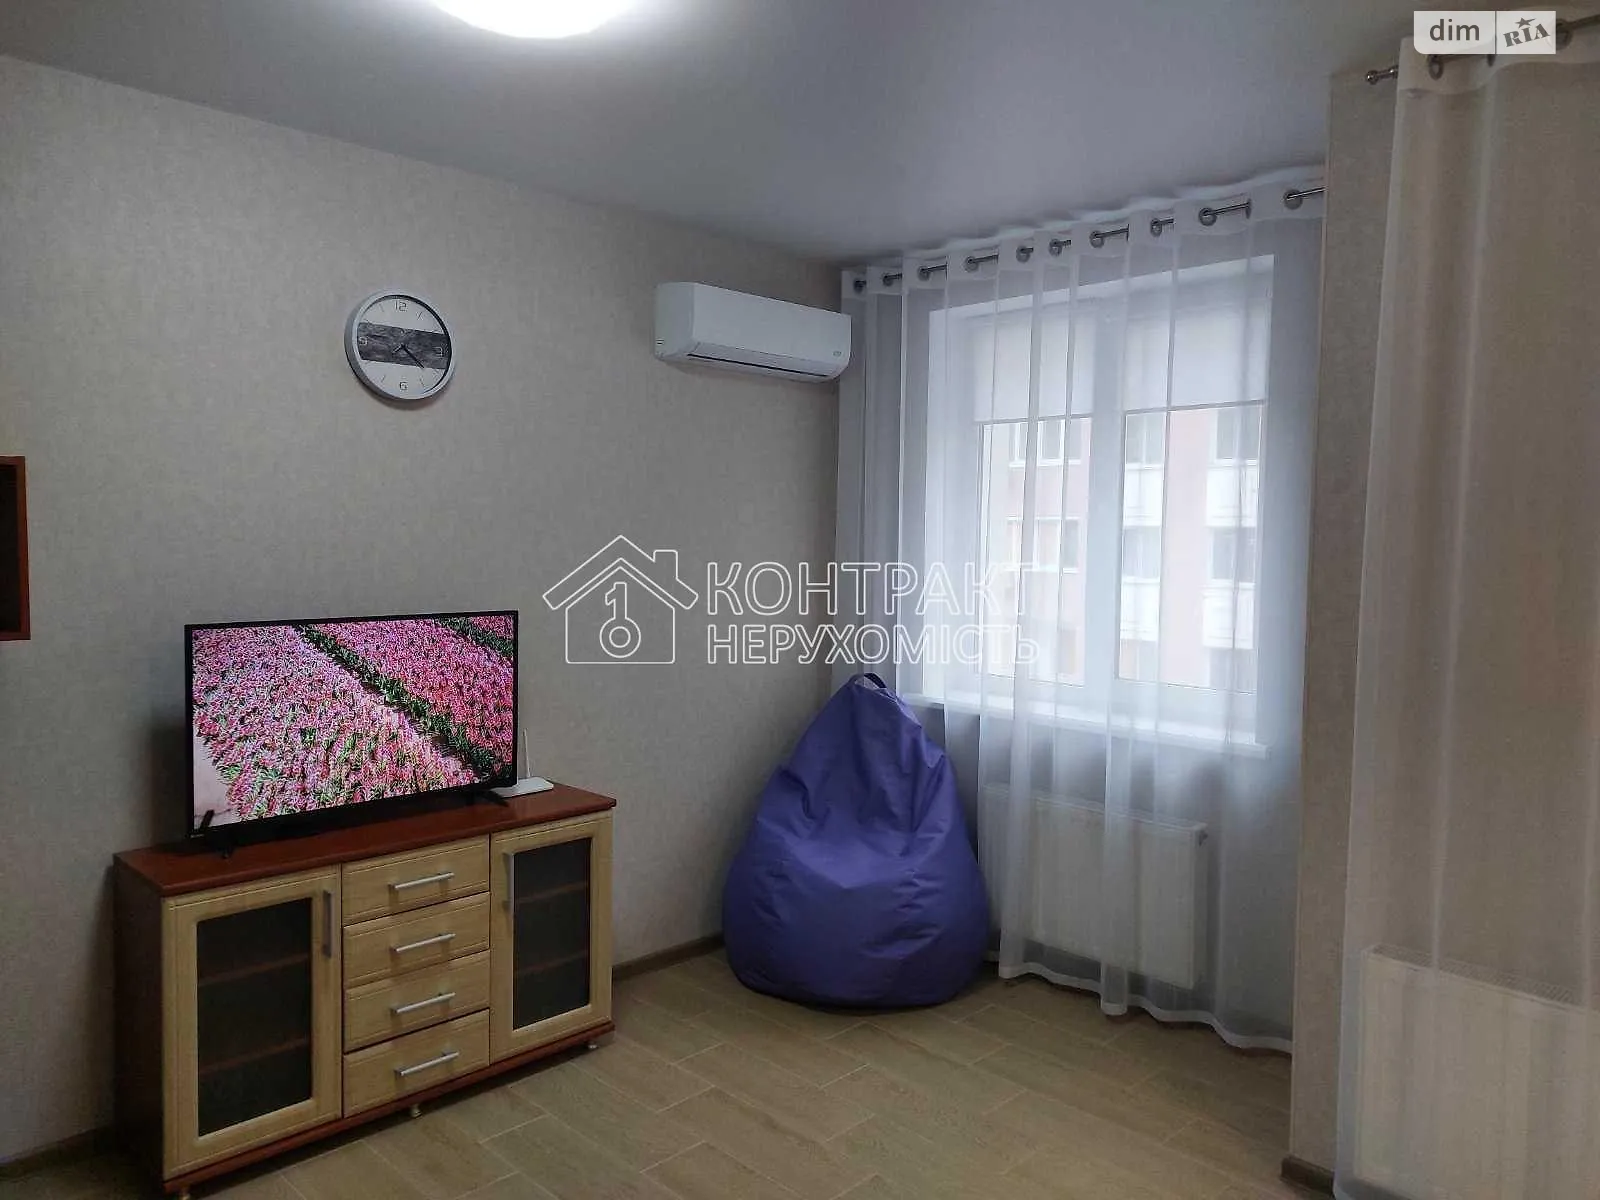 Сдается в аренду 1-комнатная квартира 33 кв. м в Харькове, ул. Козакевича - фото 1